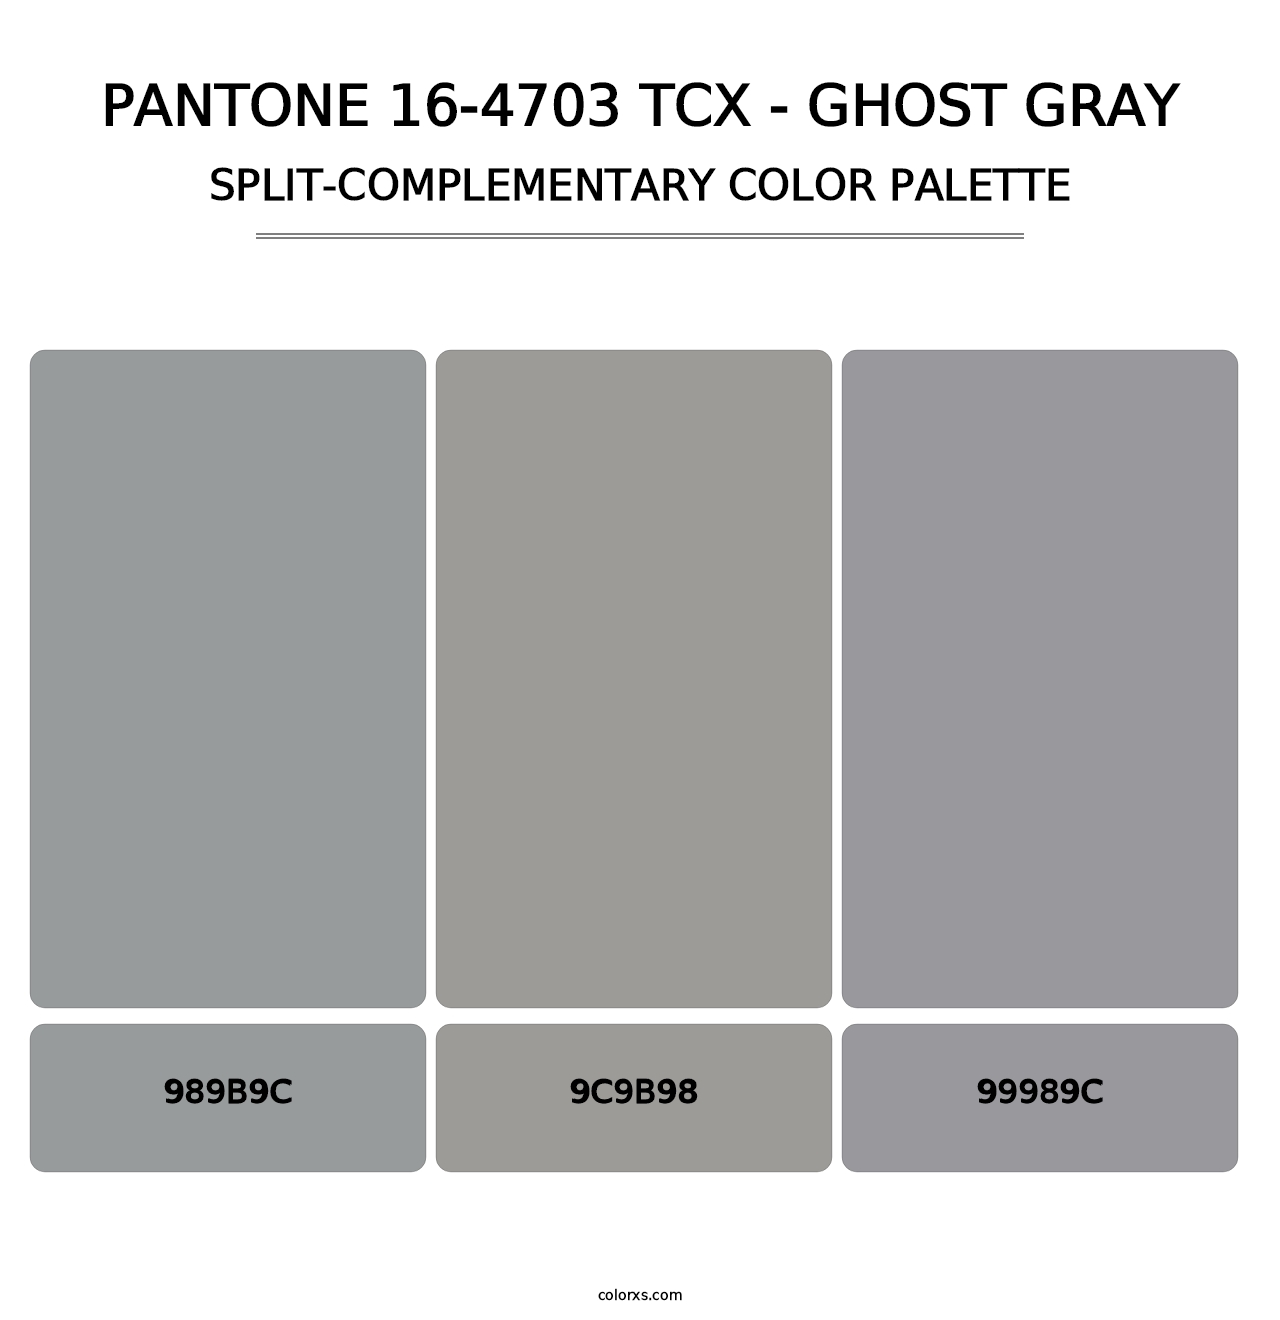 PANTONE 16-4703 TCX - Ghost Gray - Split-Complementary Color Palette